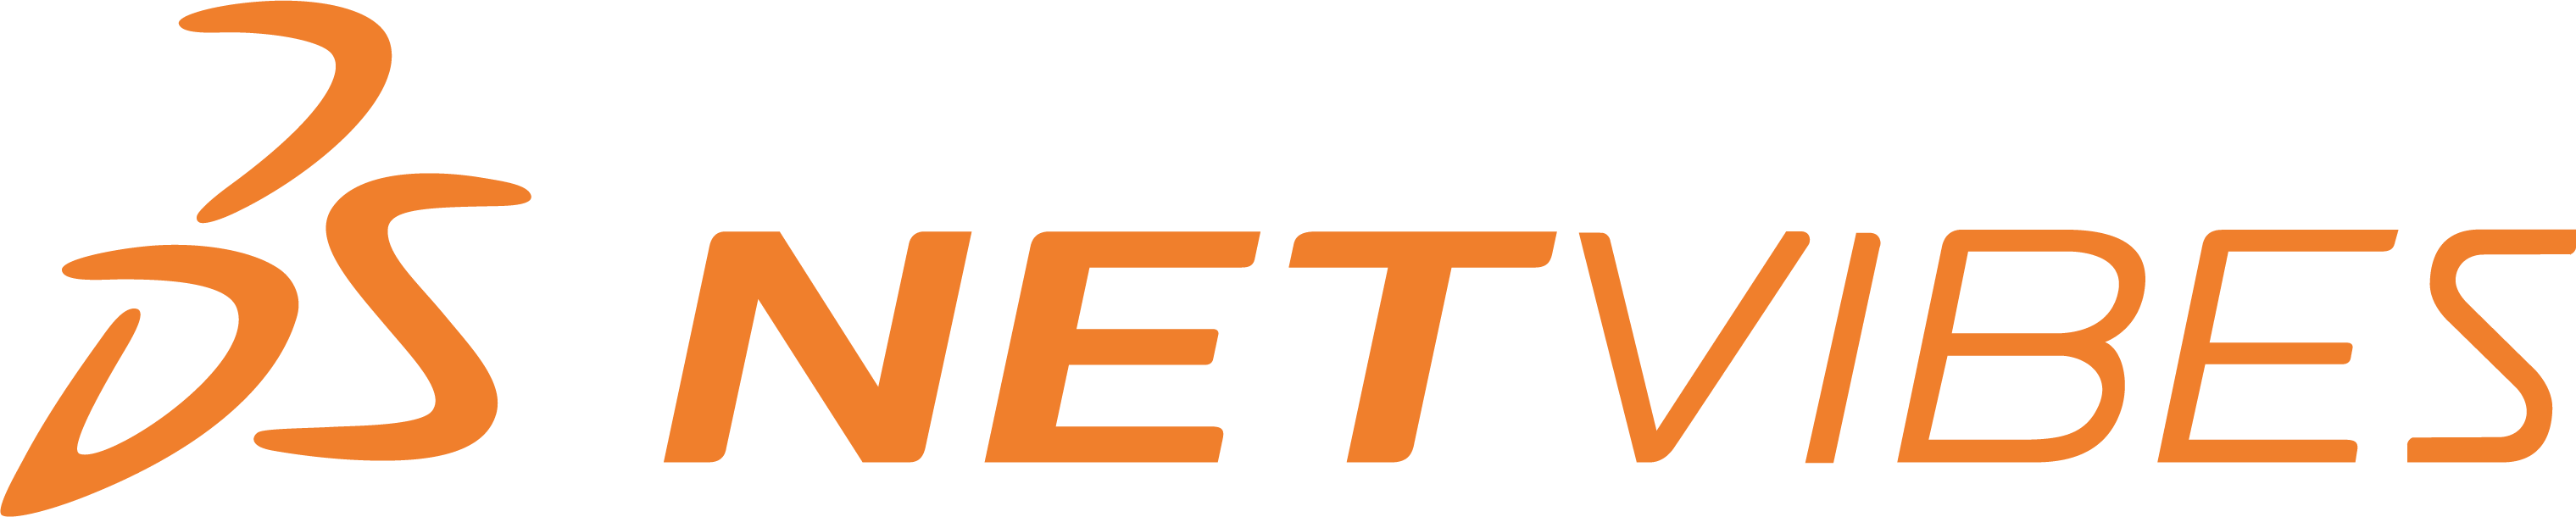 NETVIBES logo